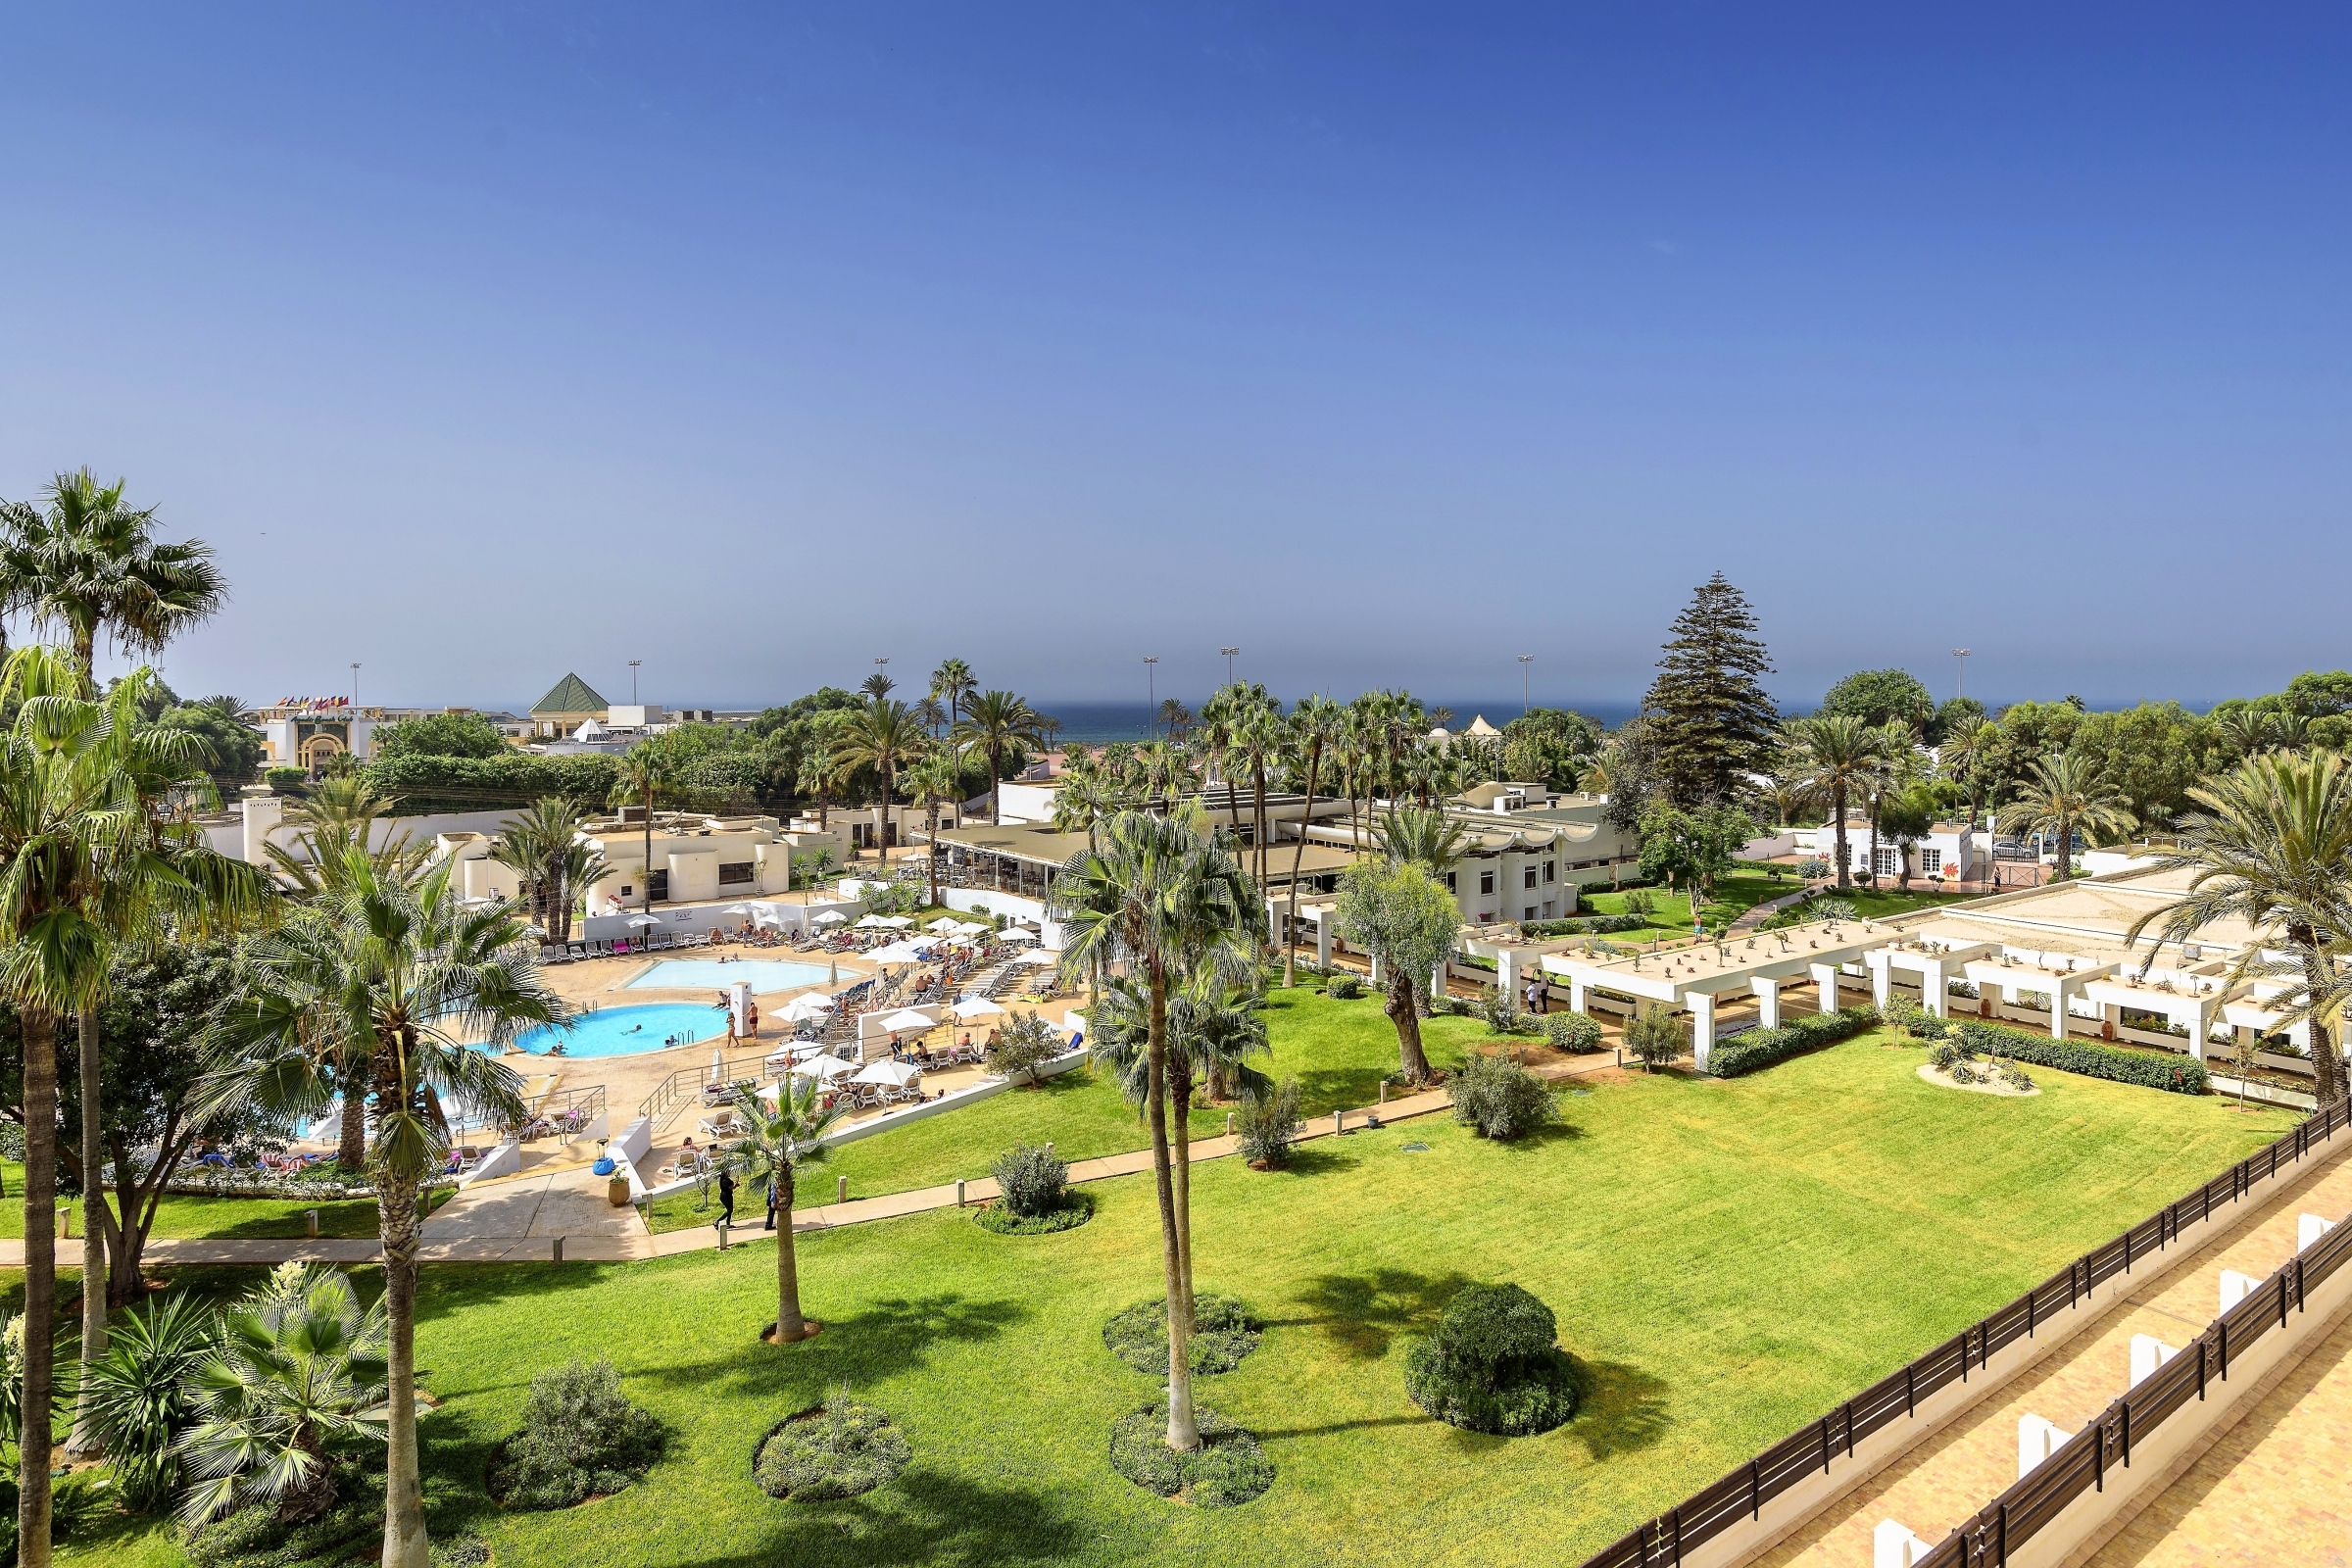 Bahia Schwimmbad Luxus Hotels In Agadir souss Massa Dr¢a top Deals at Hrs